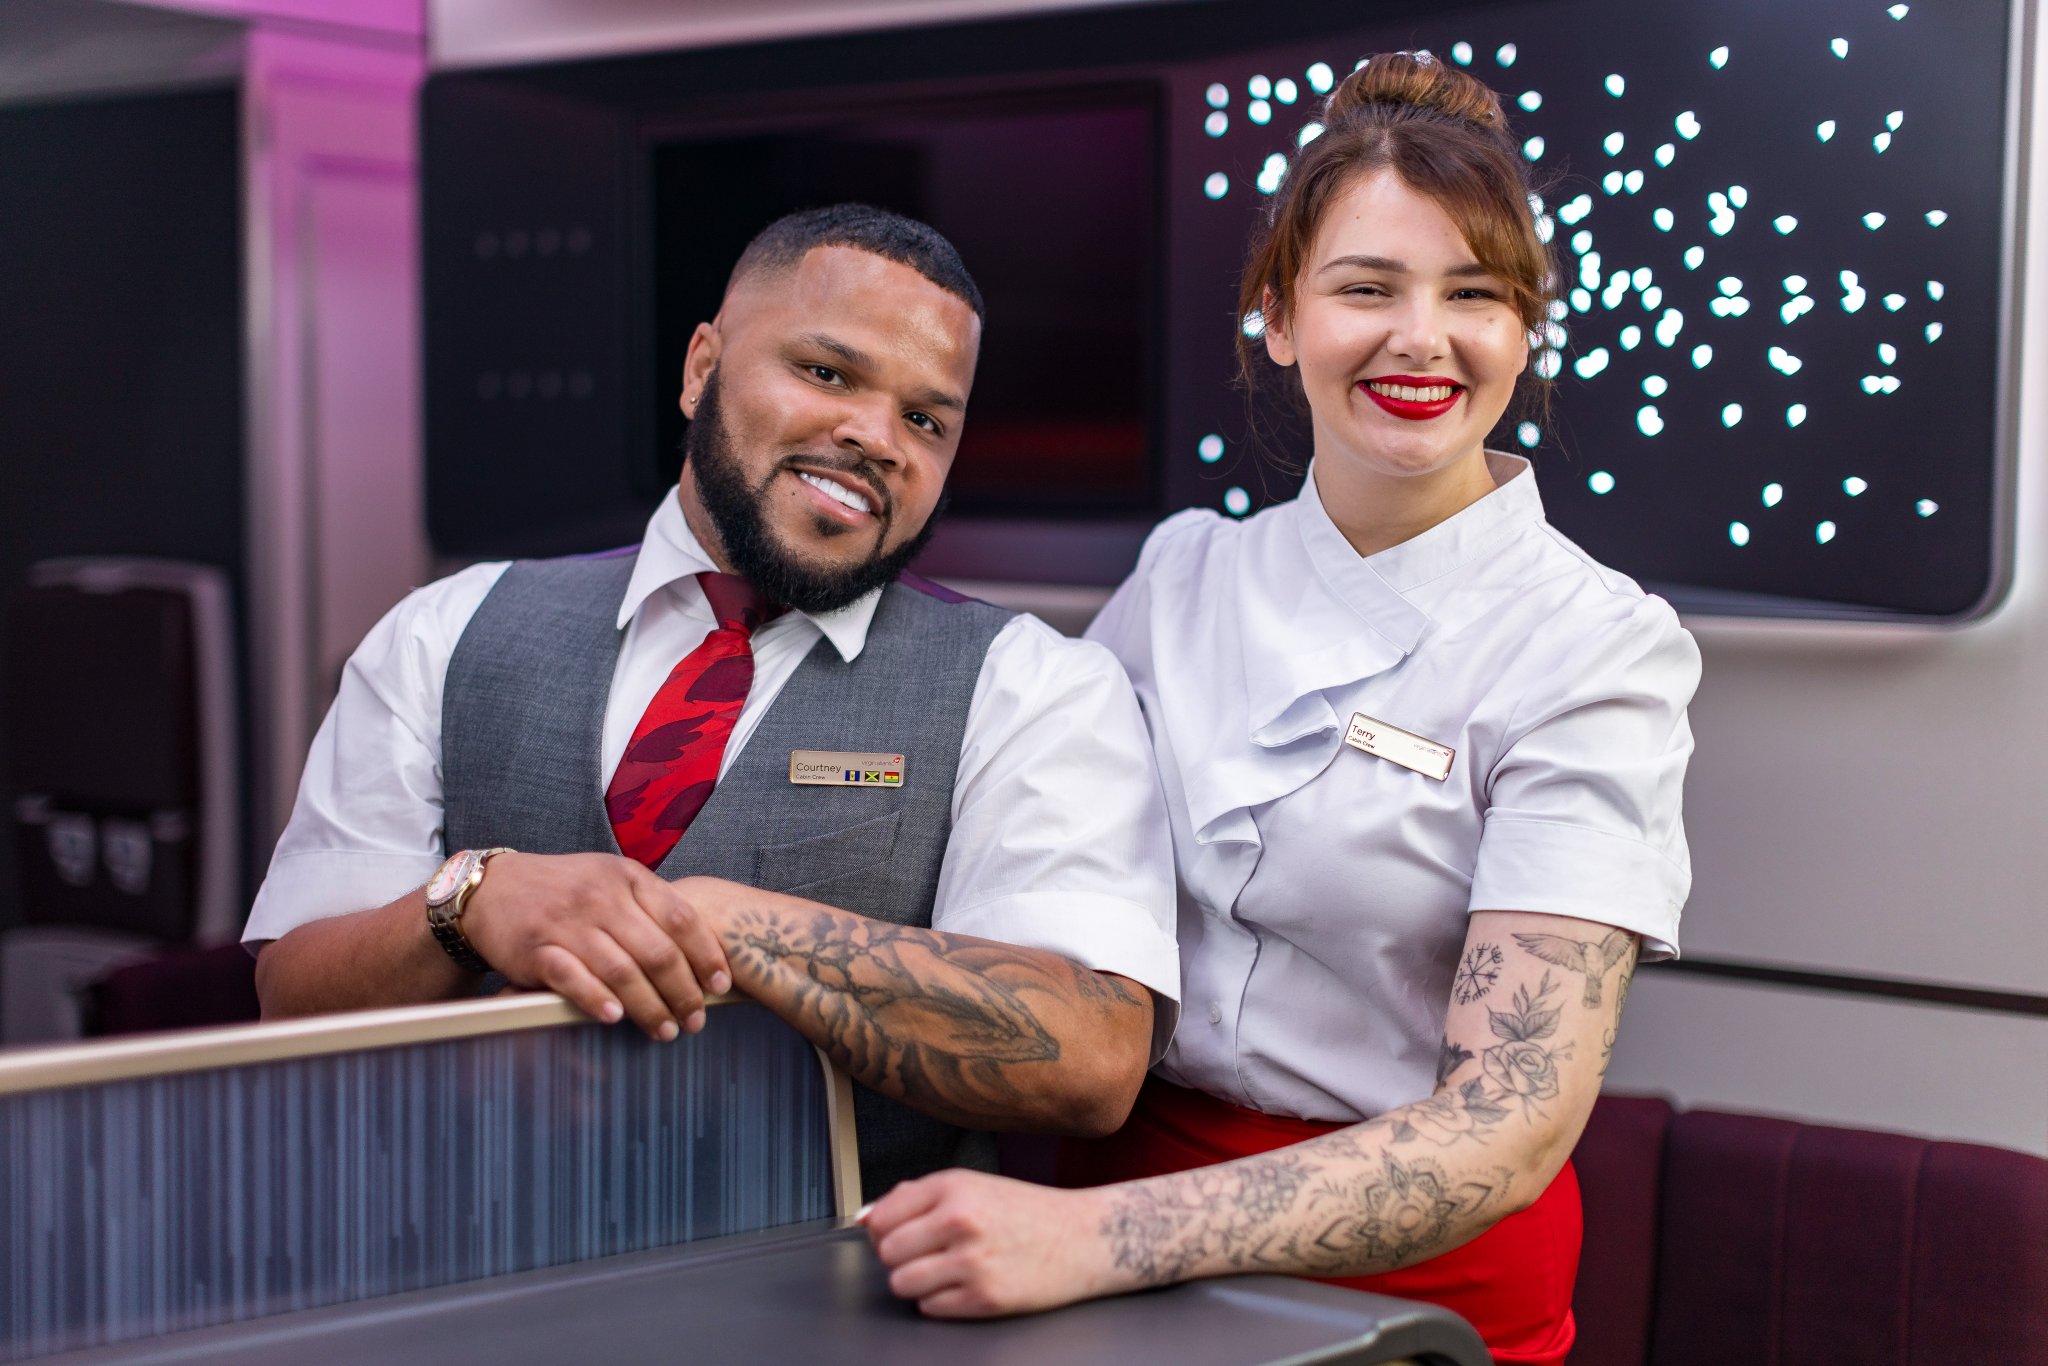 Virgin Atlantic allows flight attendants to display arm tattoos while in uniform